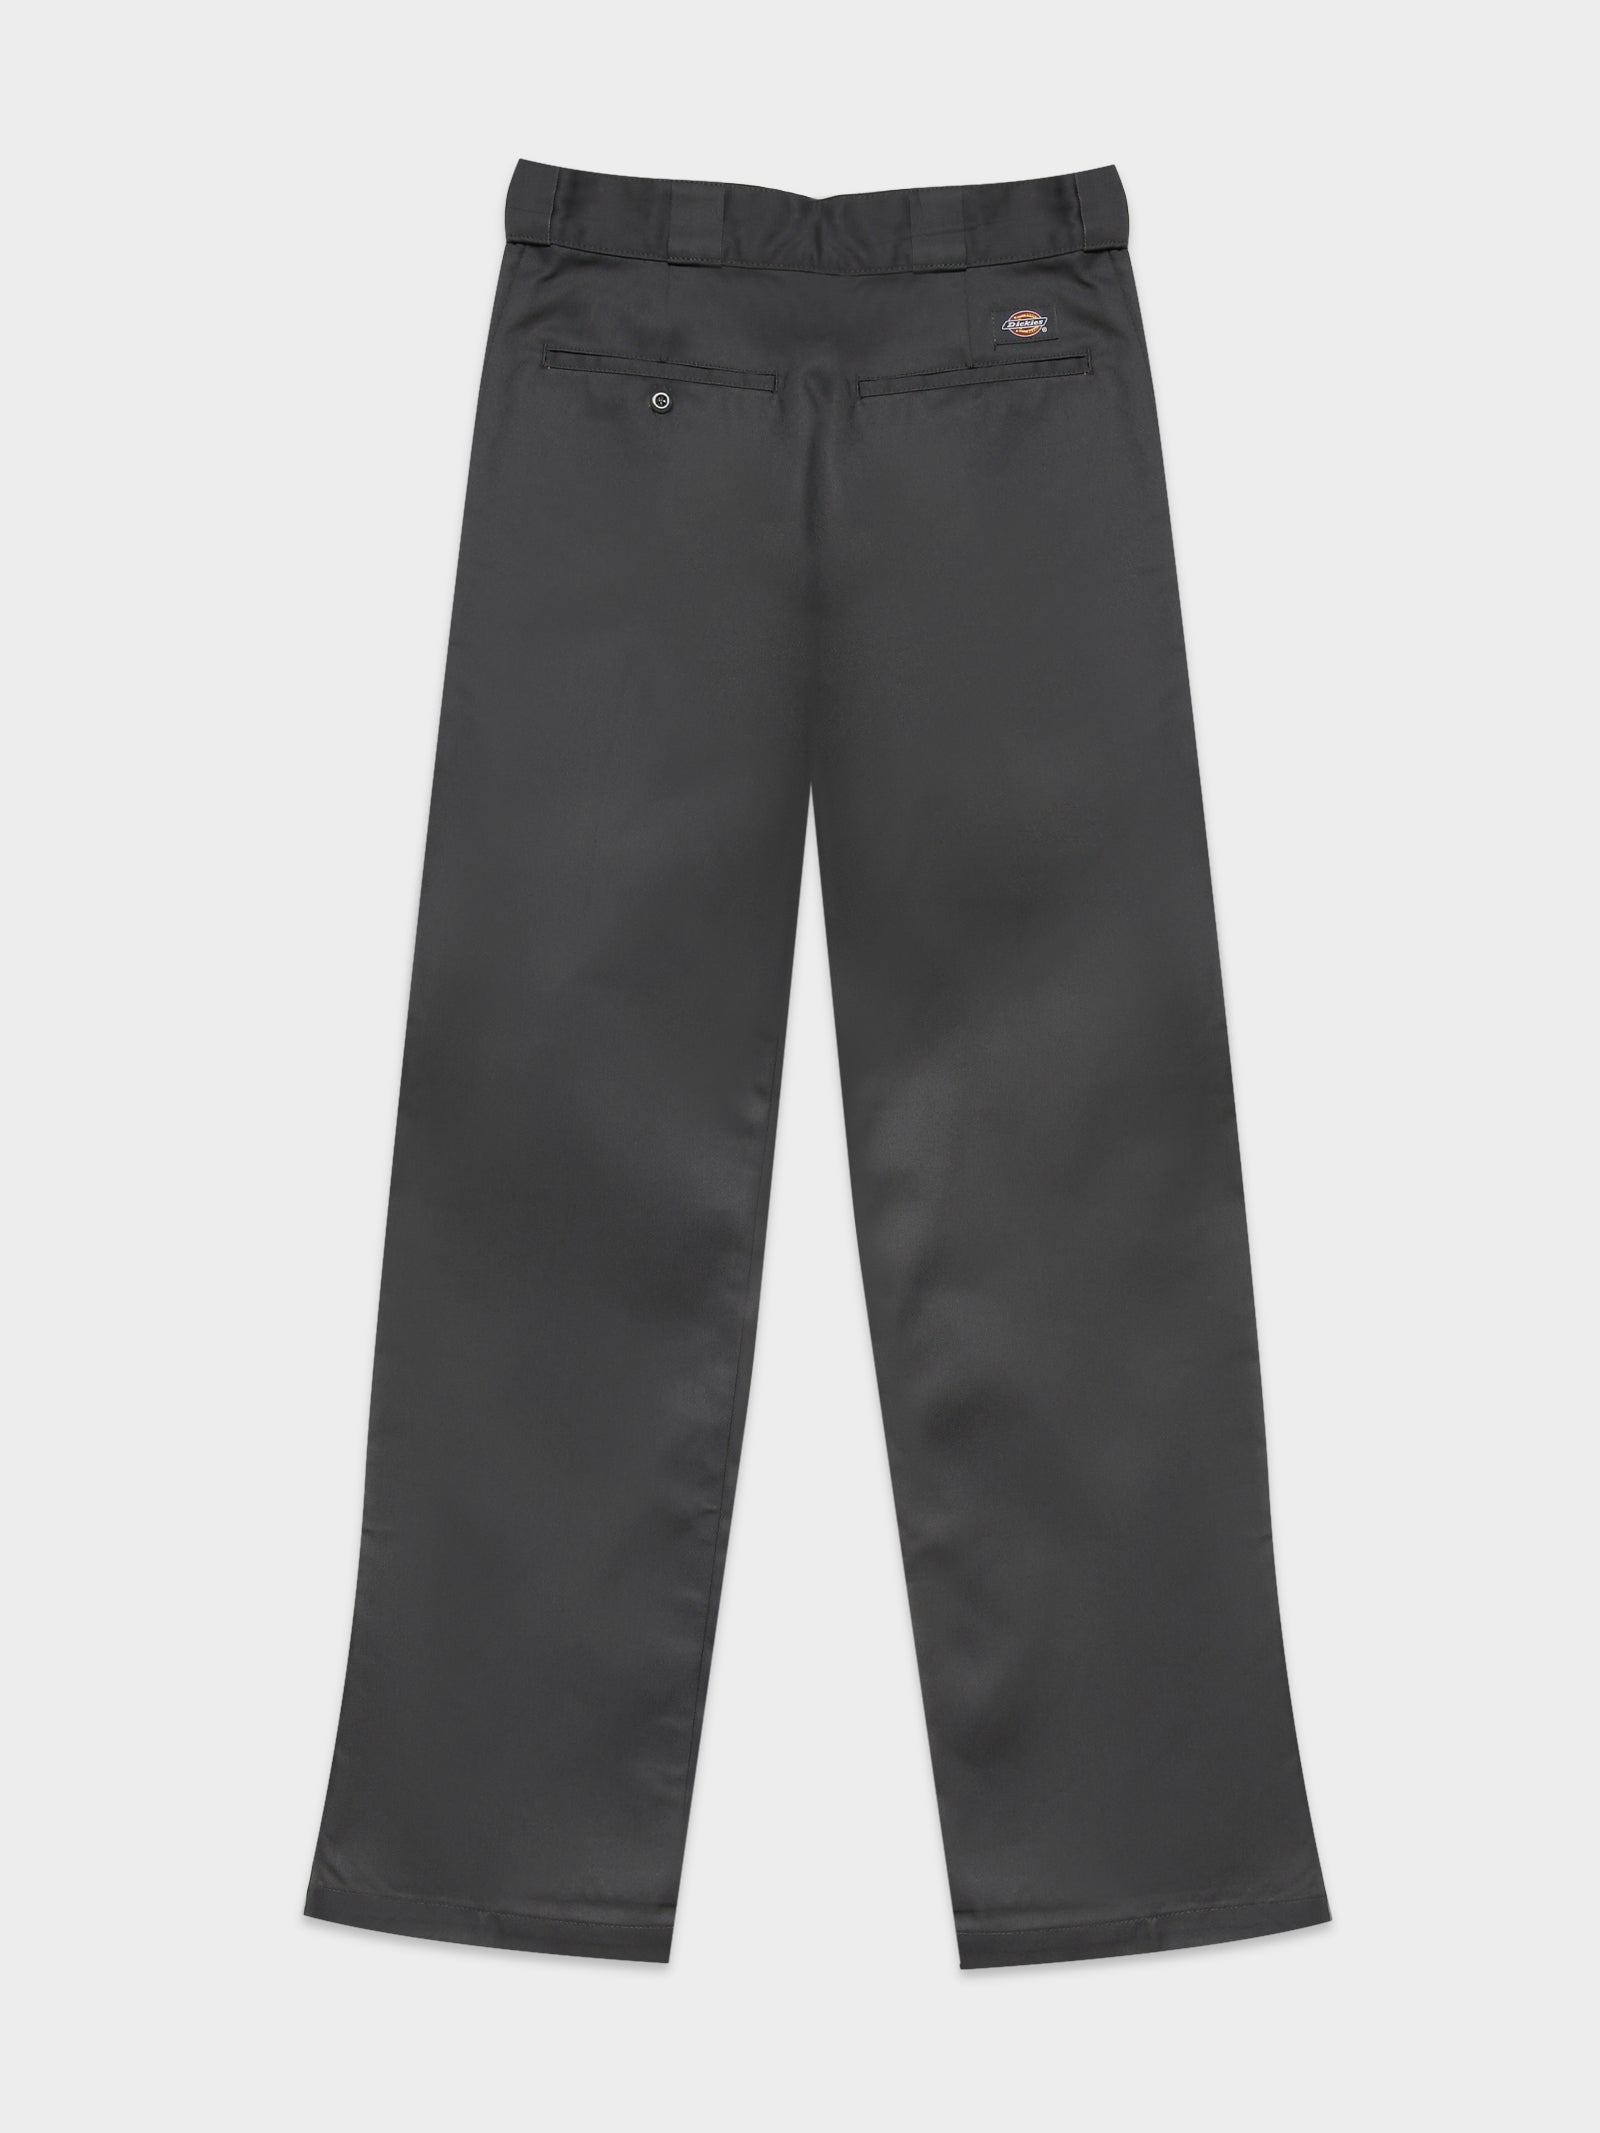 Original 874 Work Pants in Charcoal Grey - Glue Store